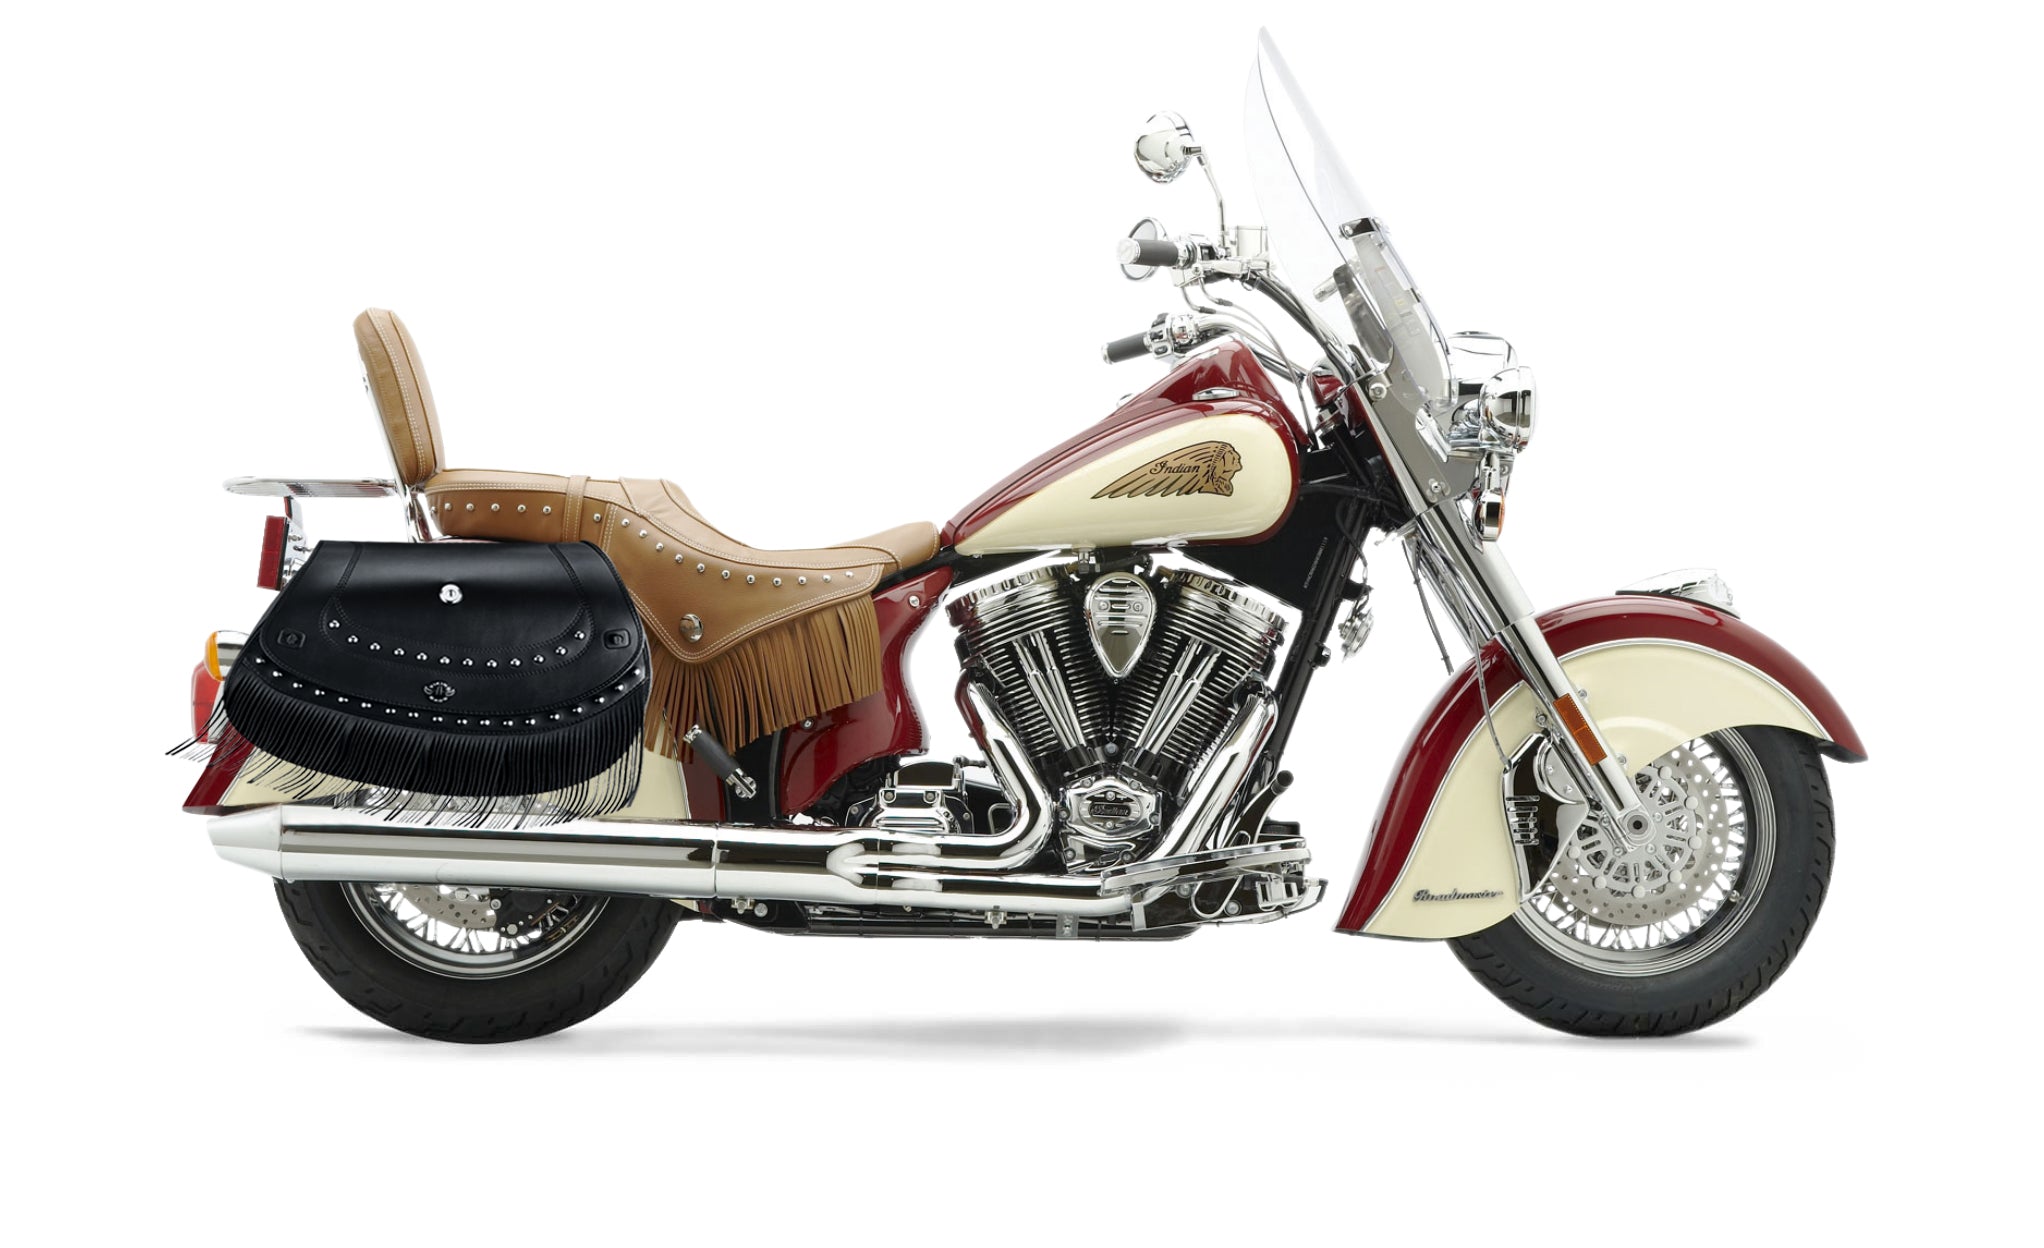 Viking Mohawk Extra Large Indian Chief Roadmaster Specific Leather Motorcycle Saddlebags on Bike Photo @expand